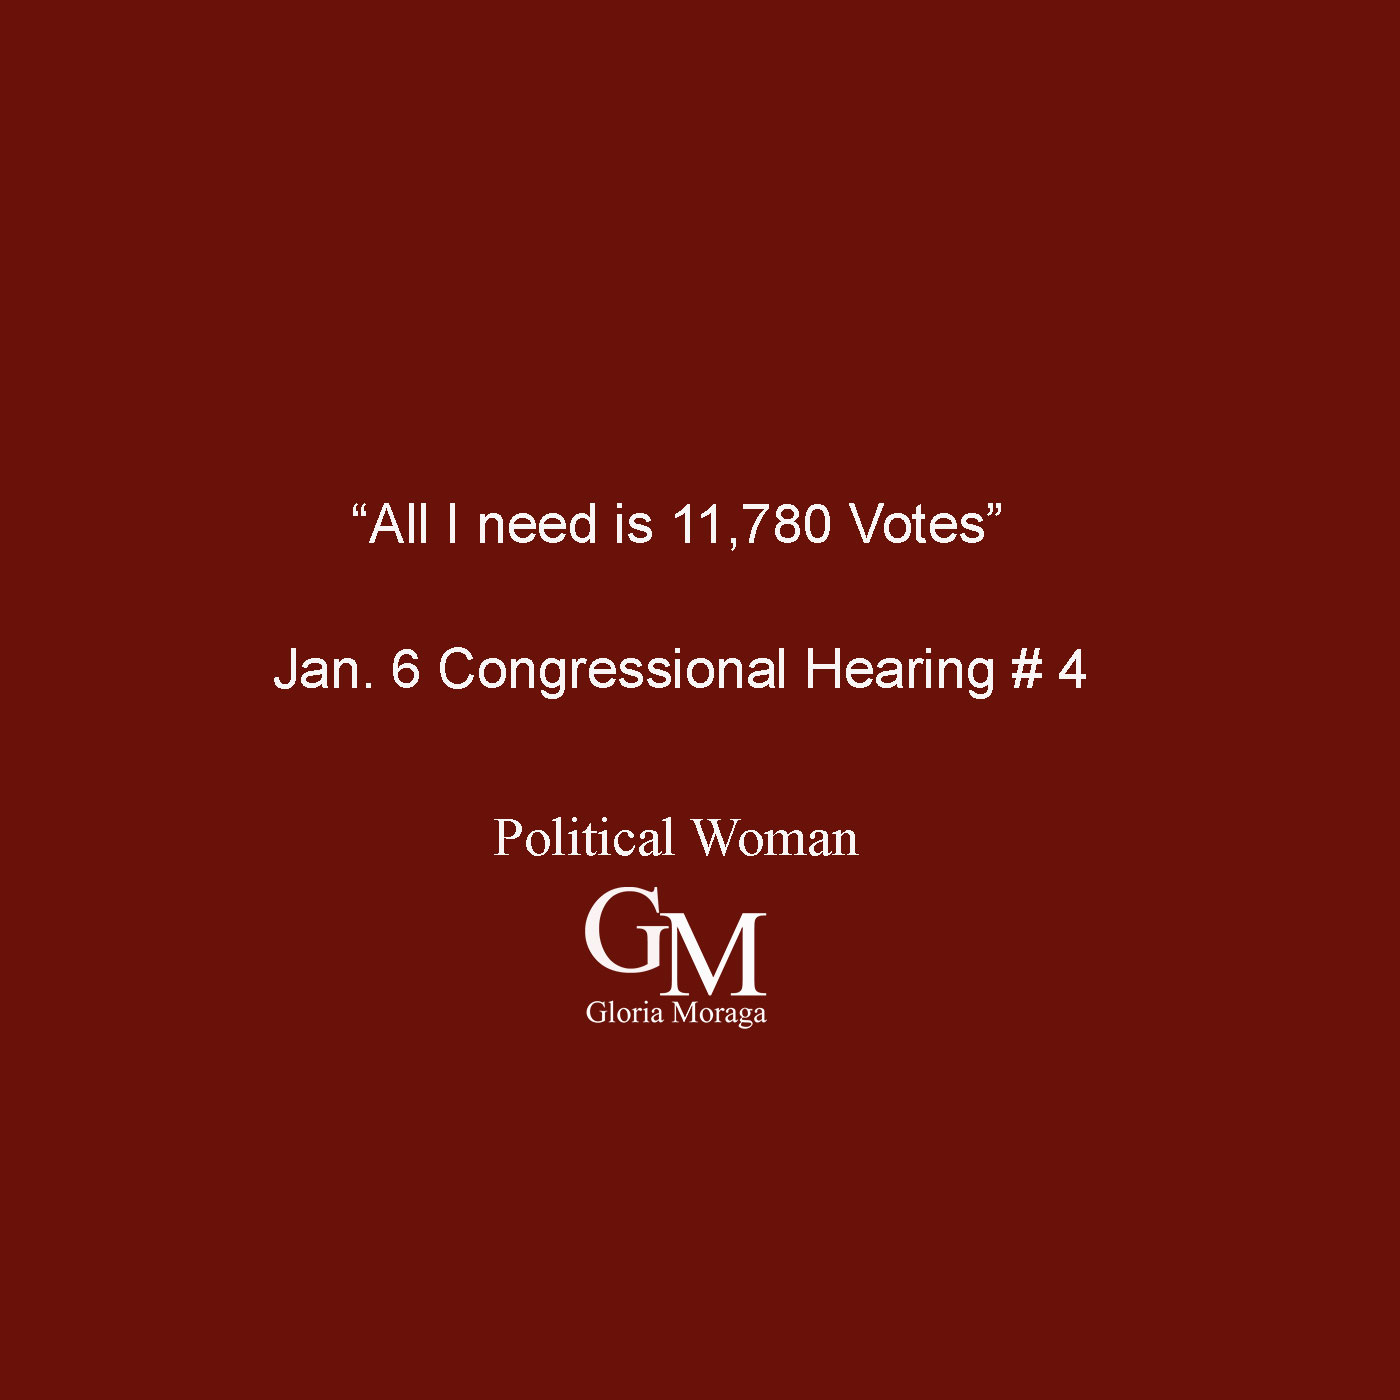 #4 “11,780 Votes” - Hearing #4